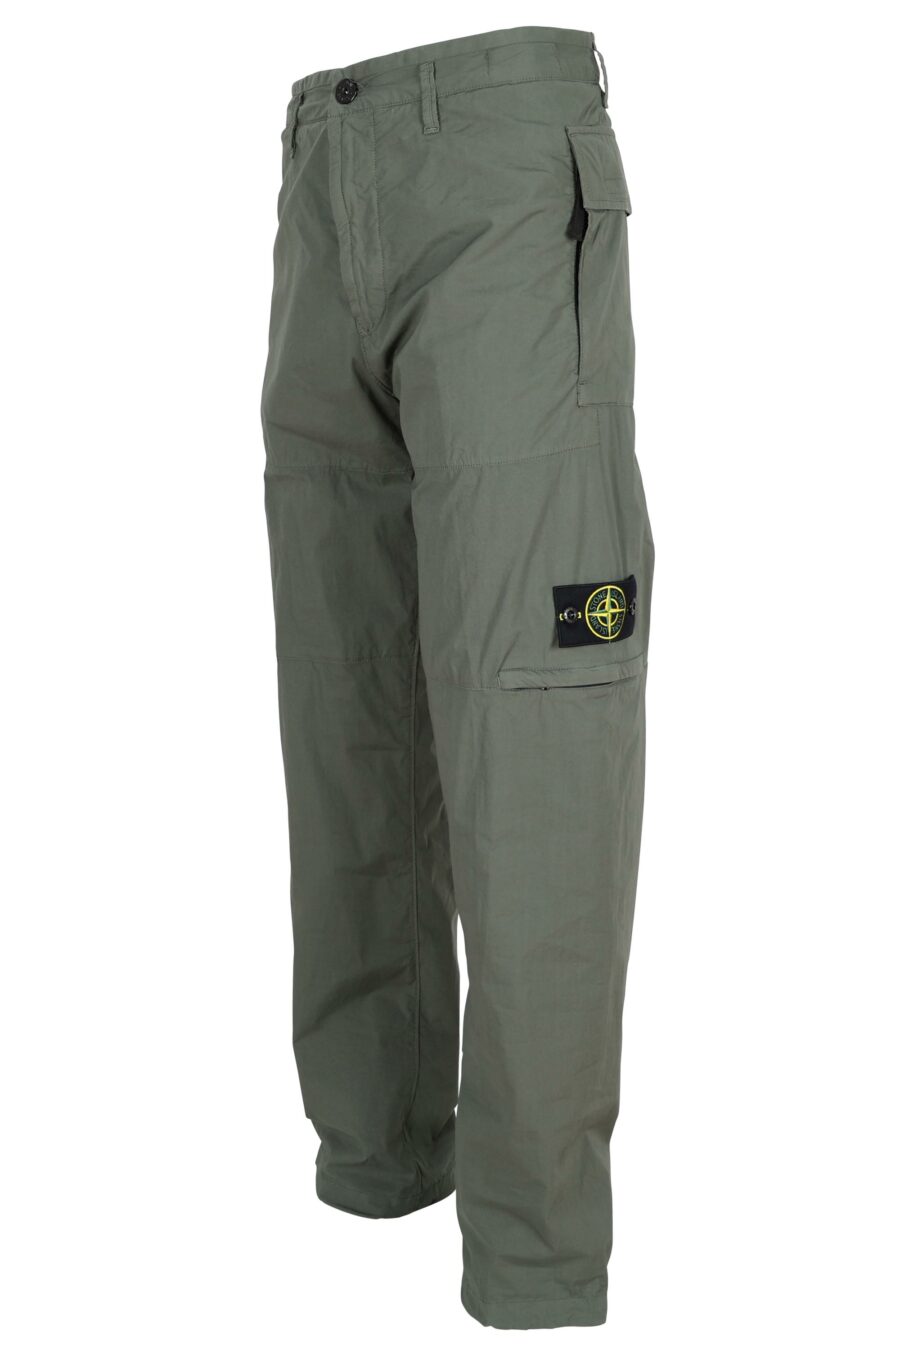 Pantalon "regular" vert militaire avec logo boussole - 8052572955013 2